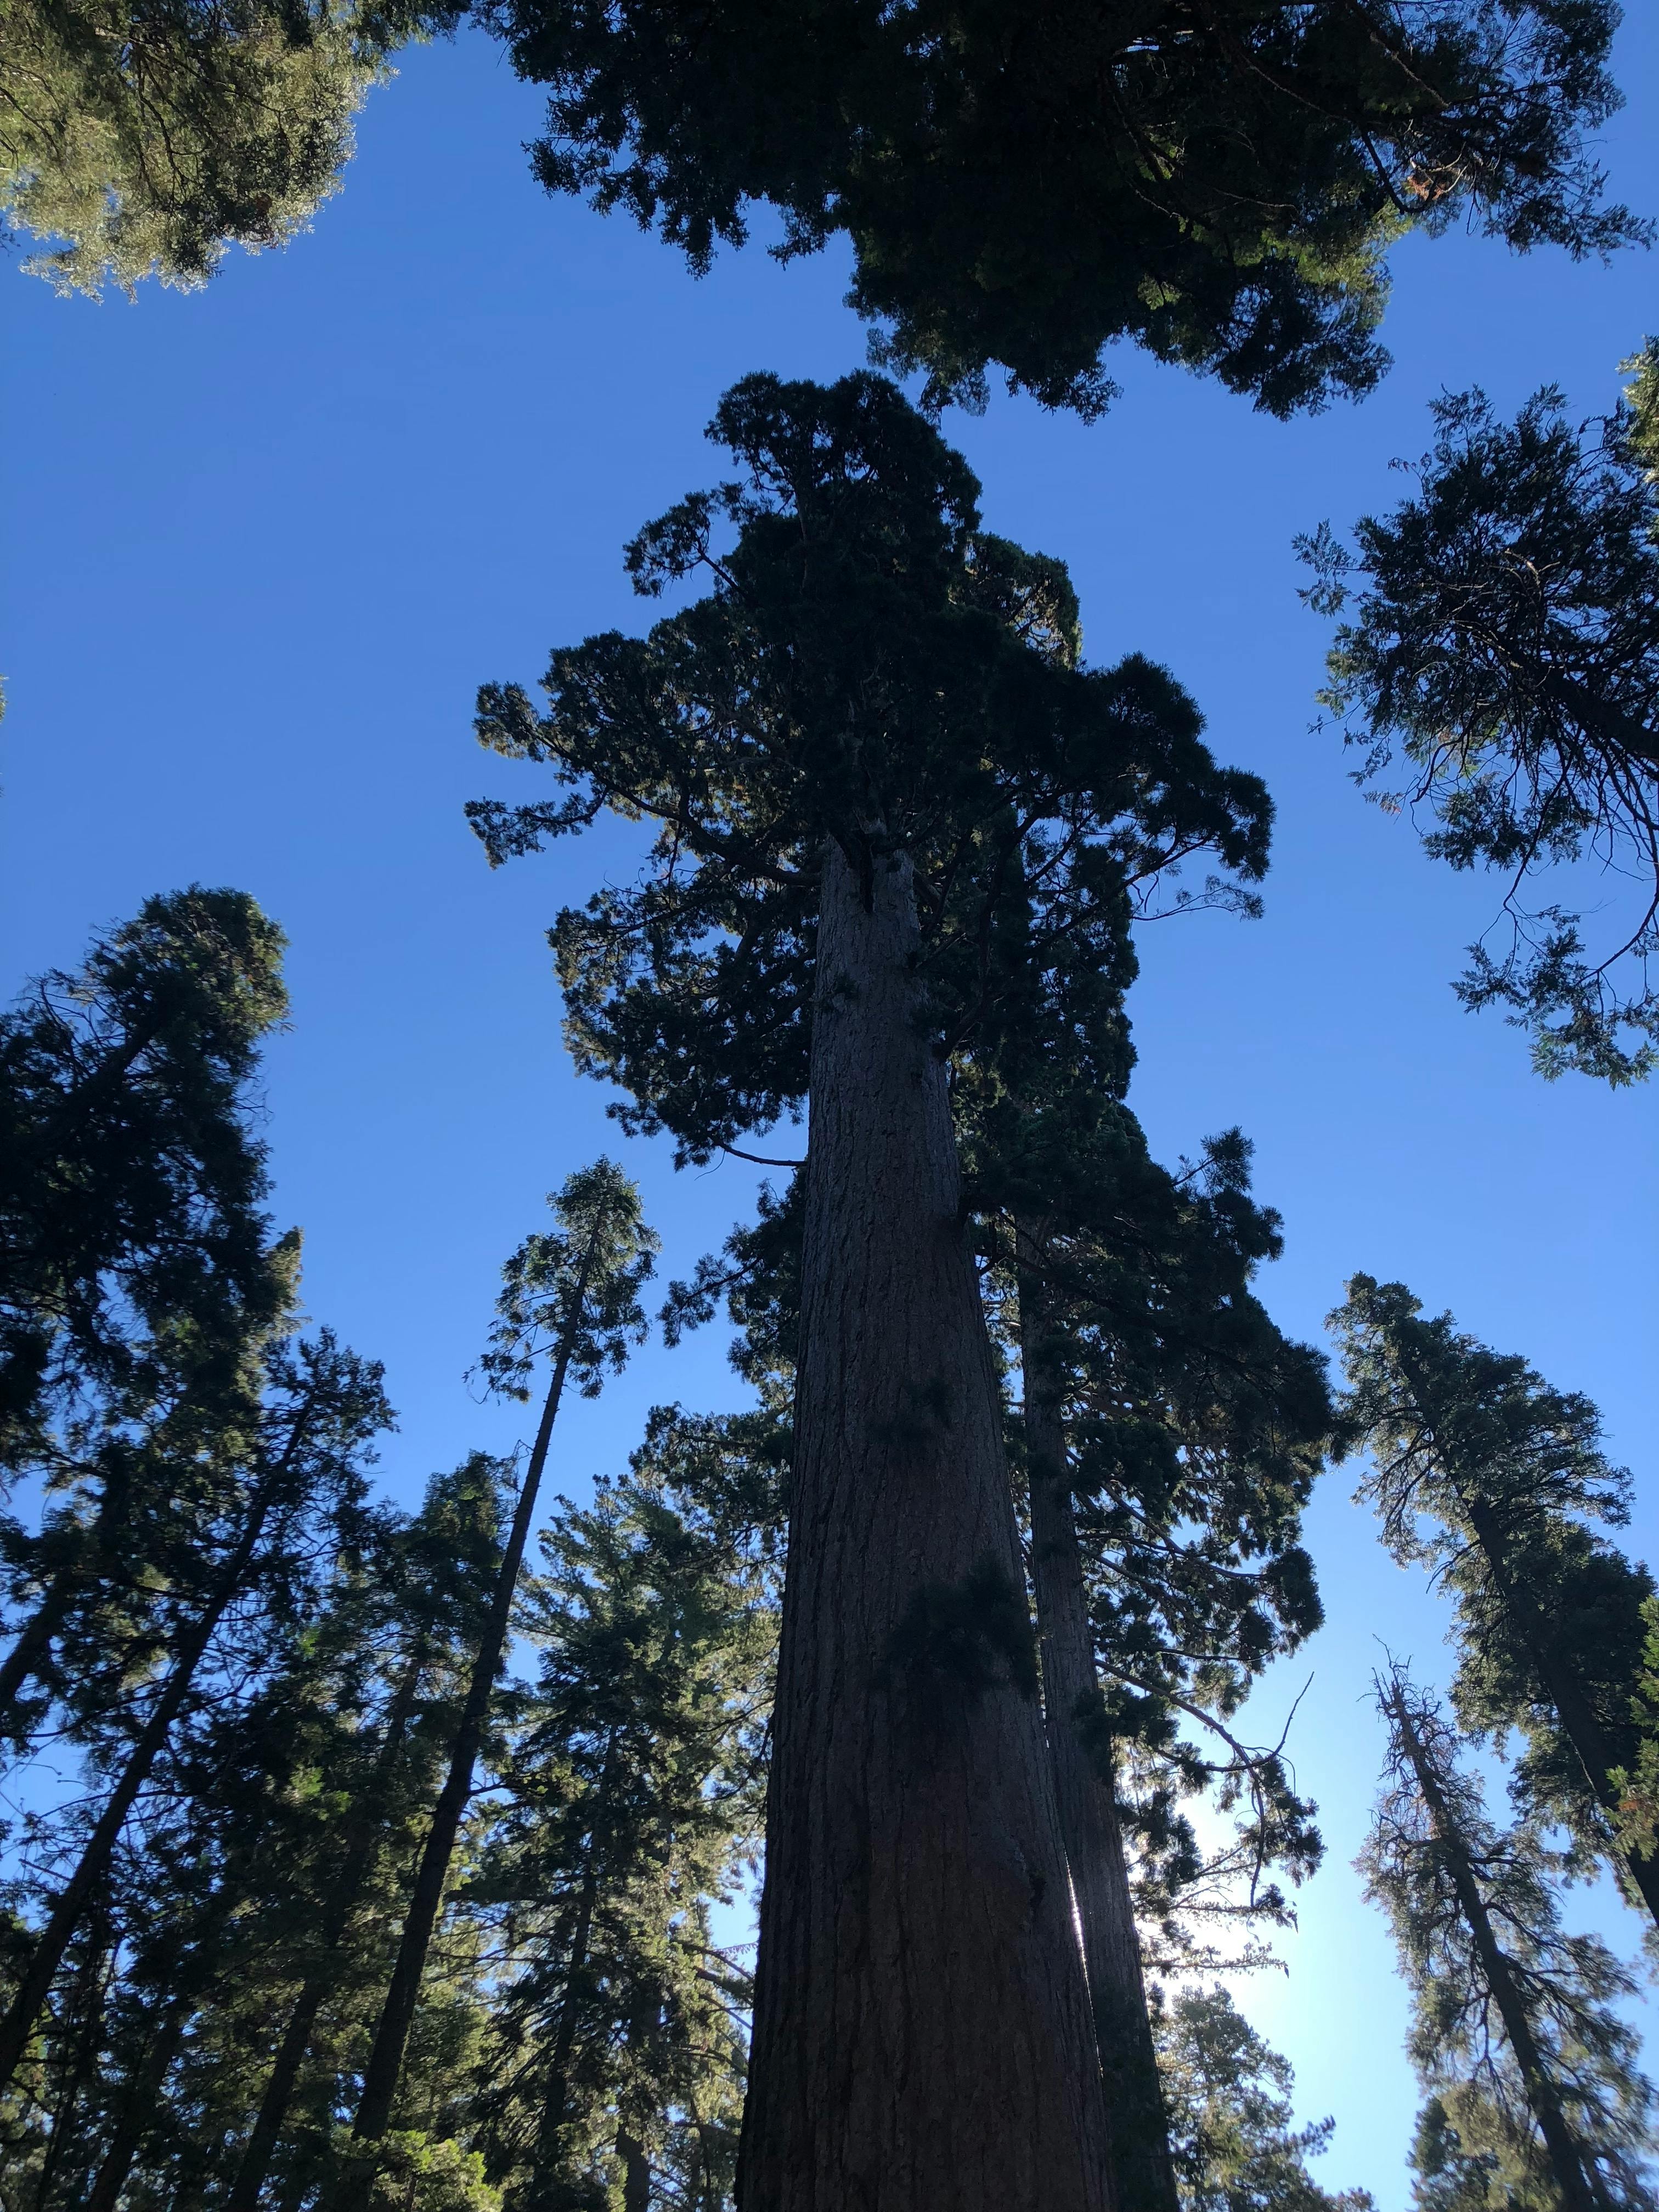 Free stock photo of redwood trees, redwoods, trees